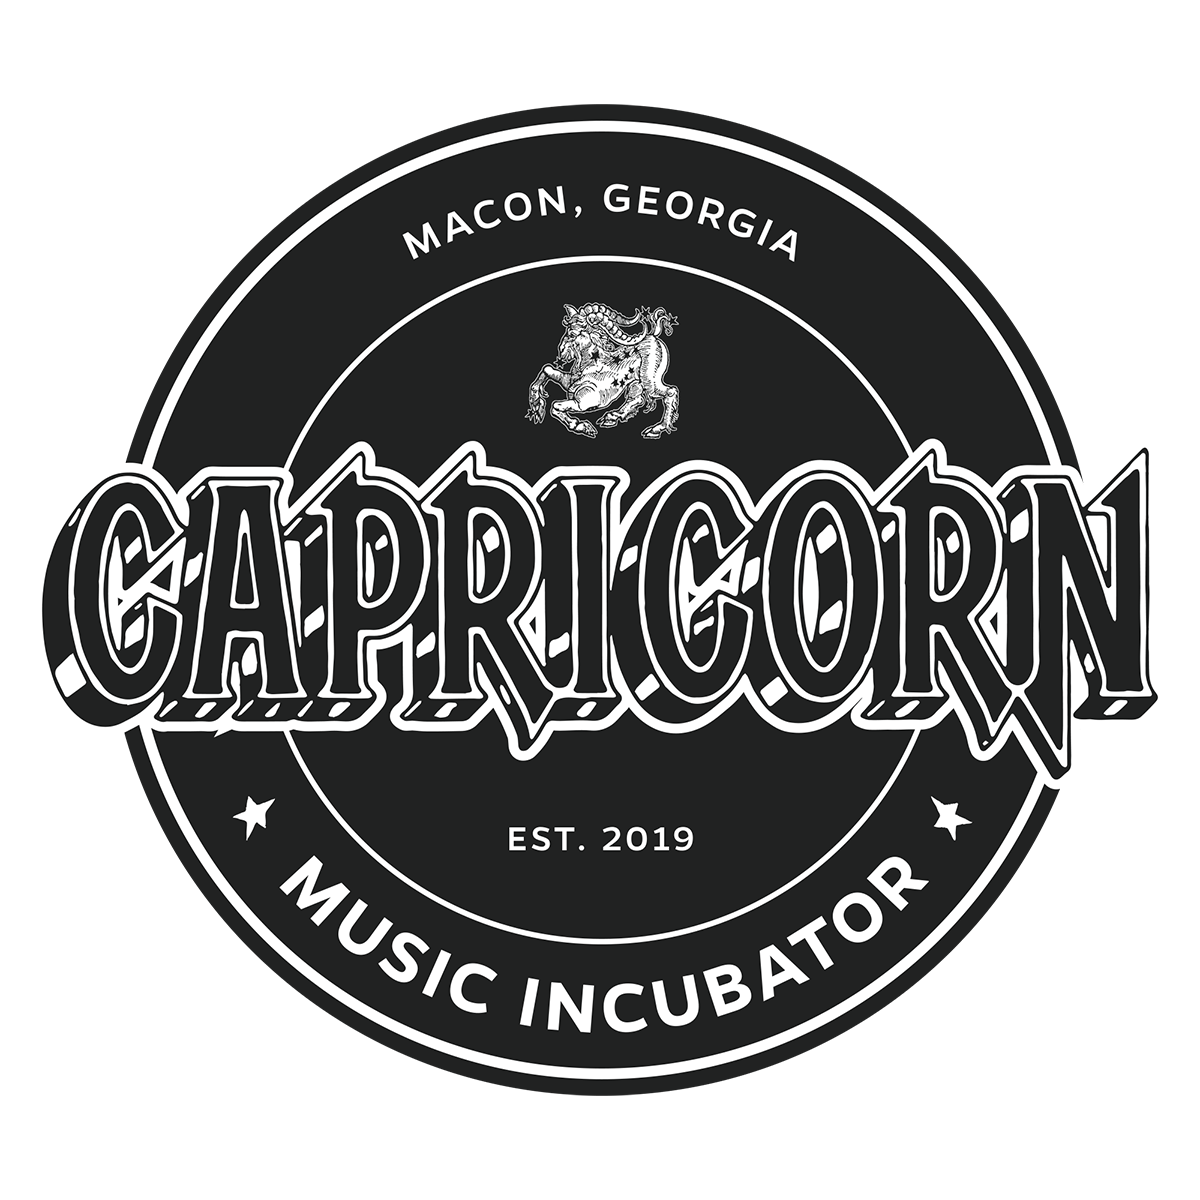 Capricorn Music Incubator